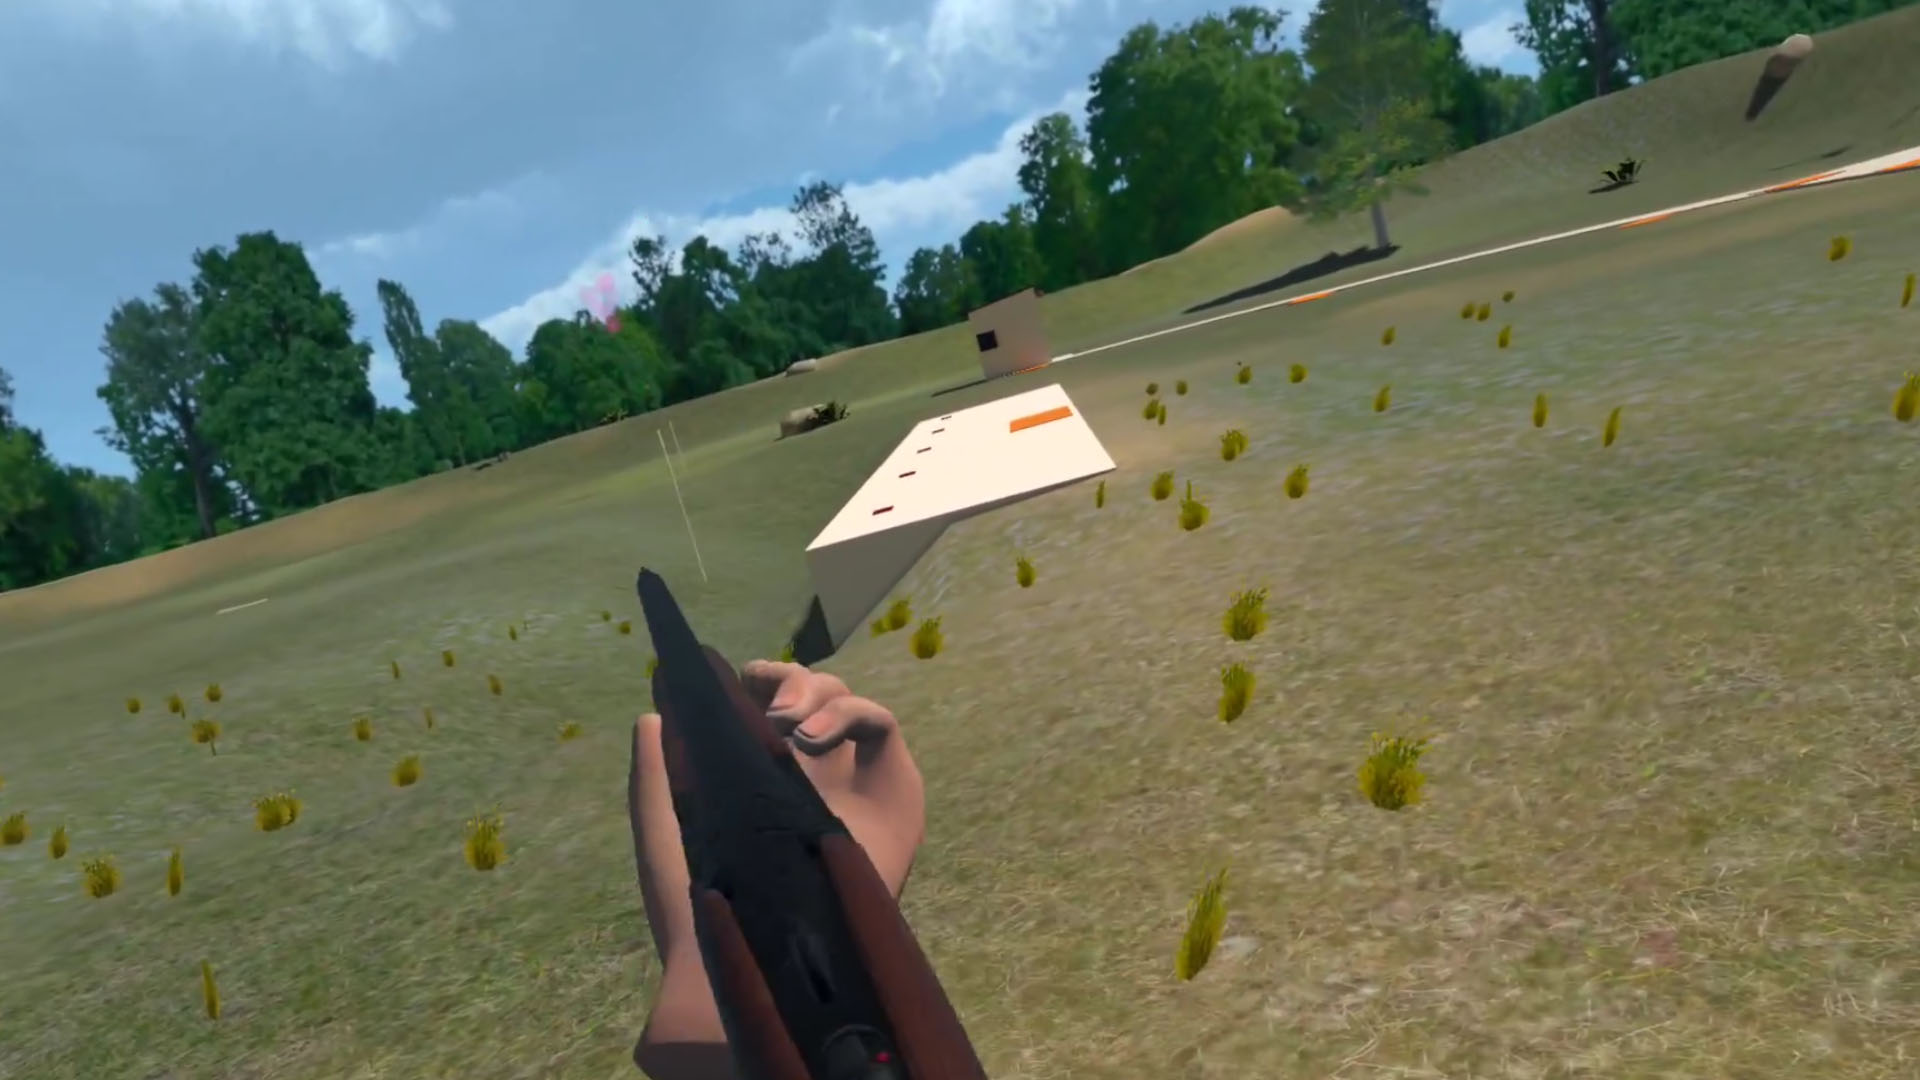 Clay Hunt VR Screenshot